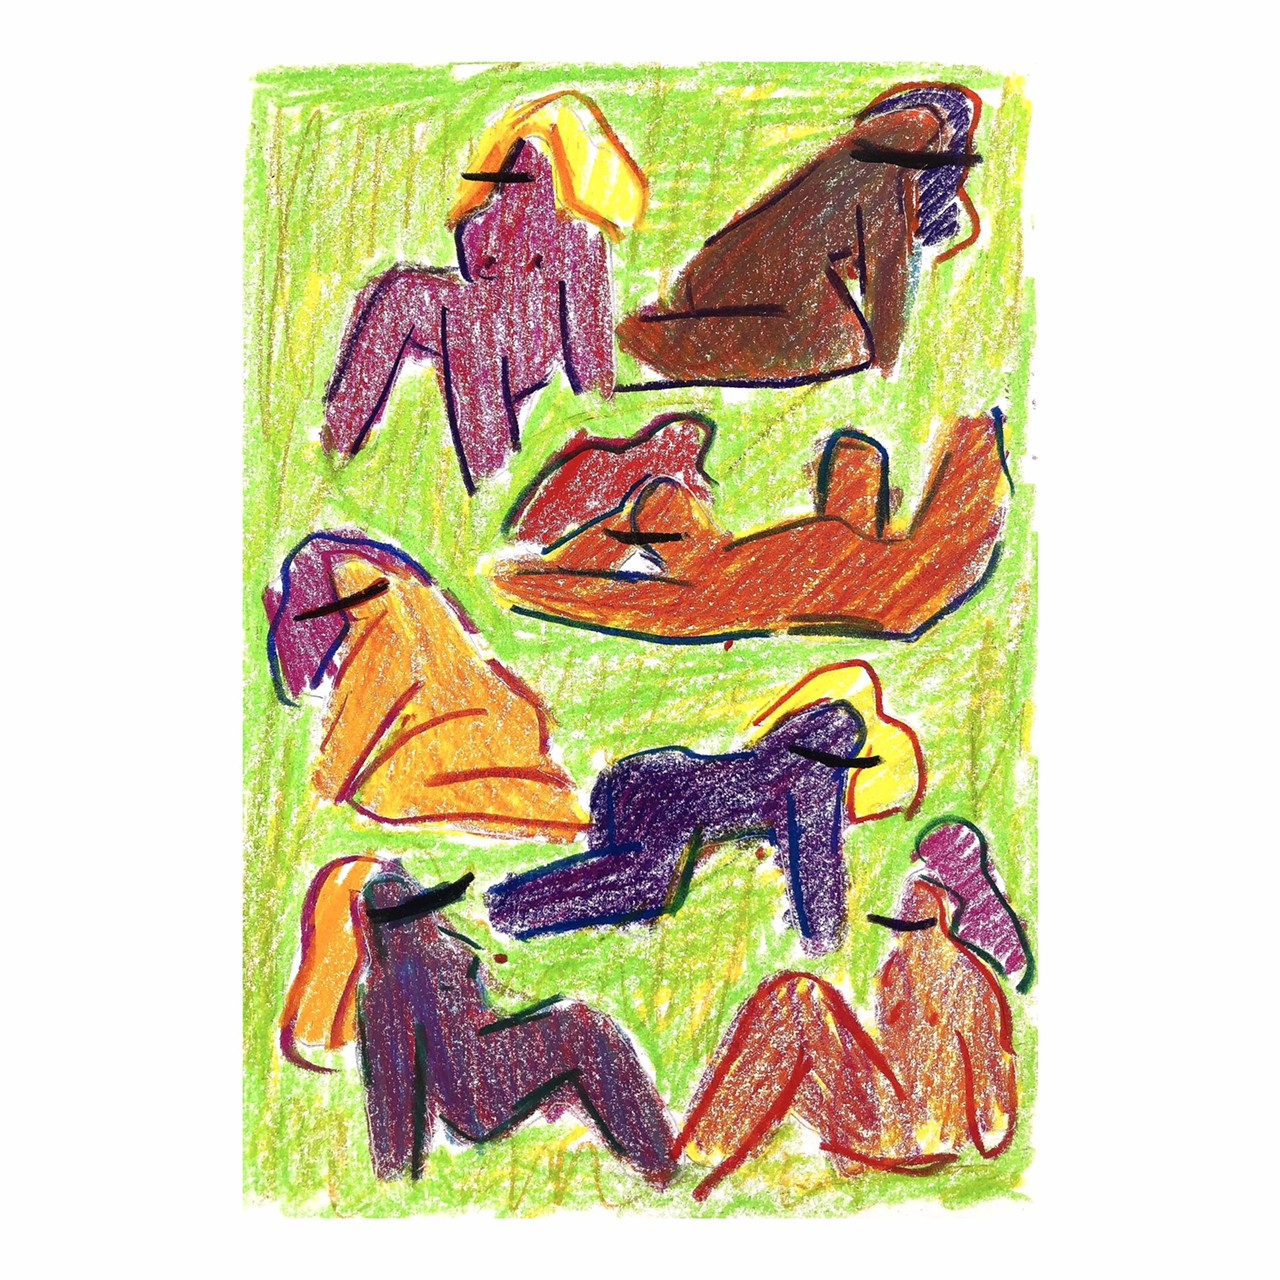 “Fun Field,” 2020, 5.5” x 8”, crayon on paper, $100